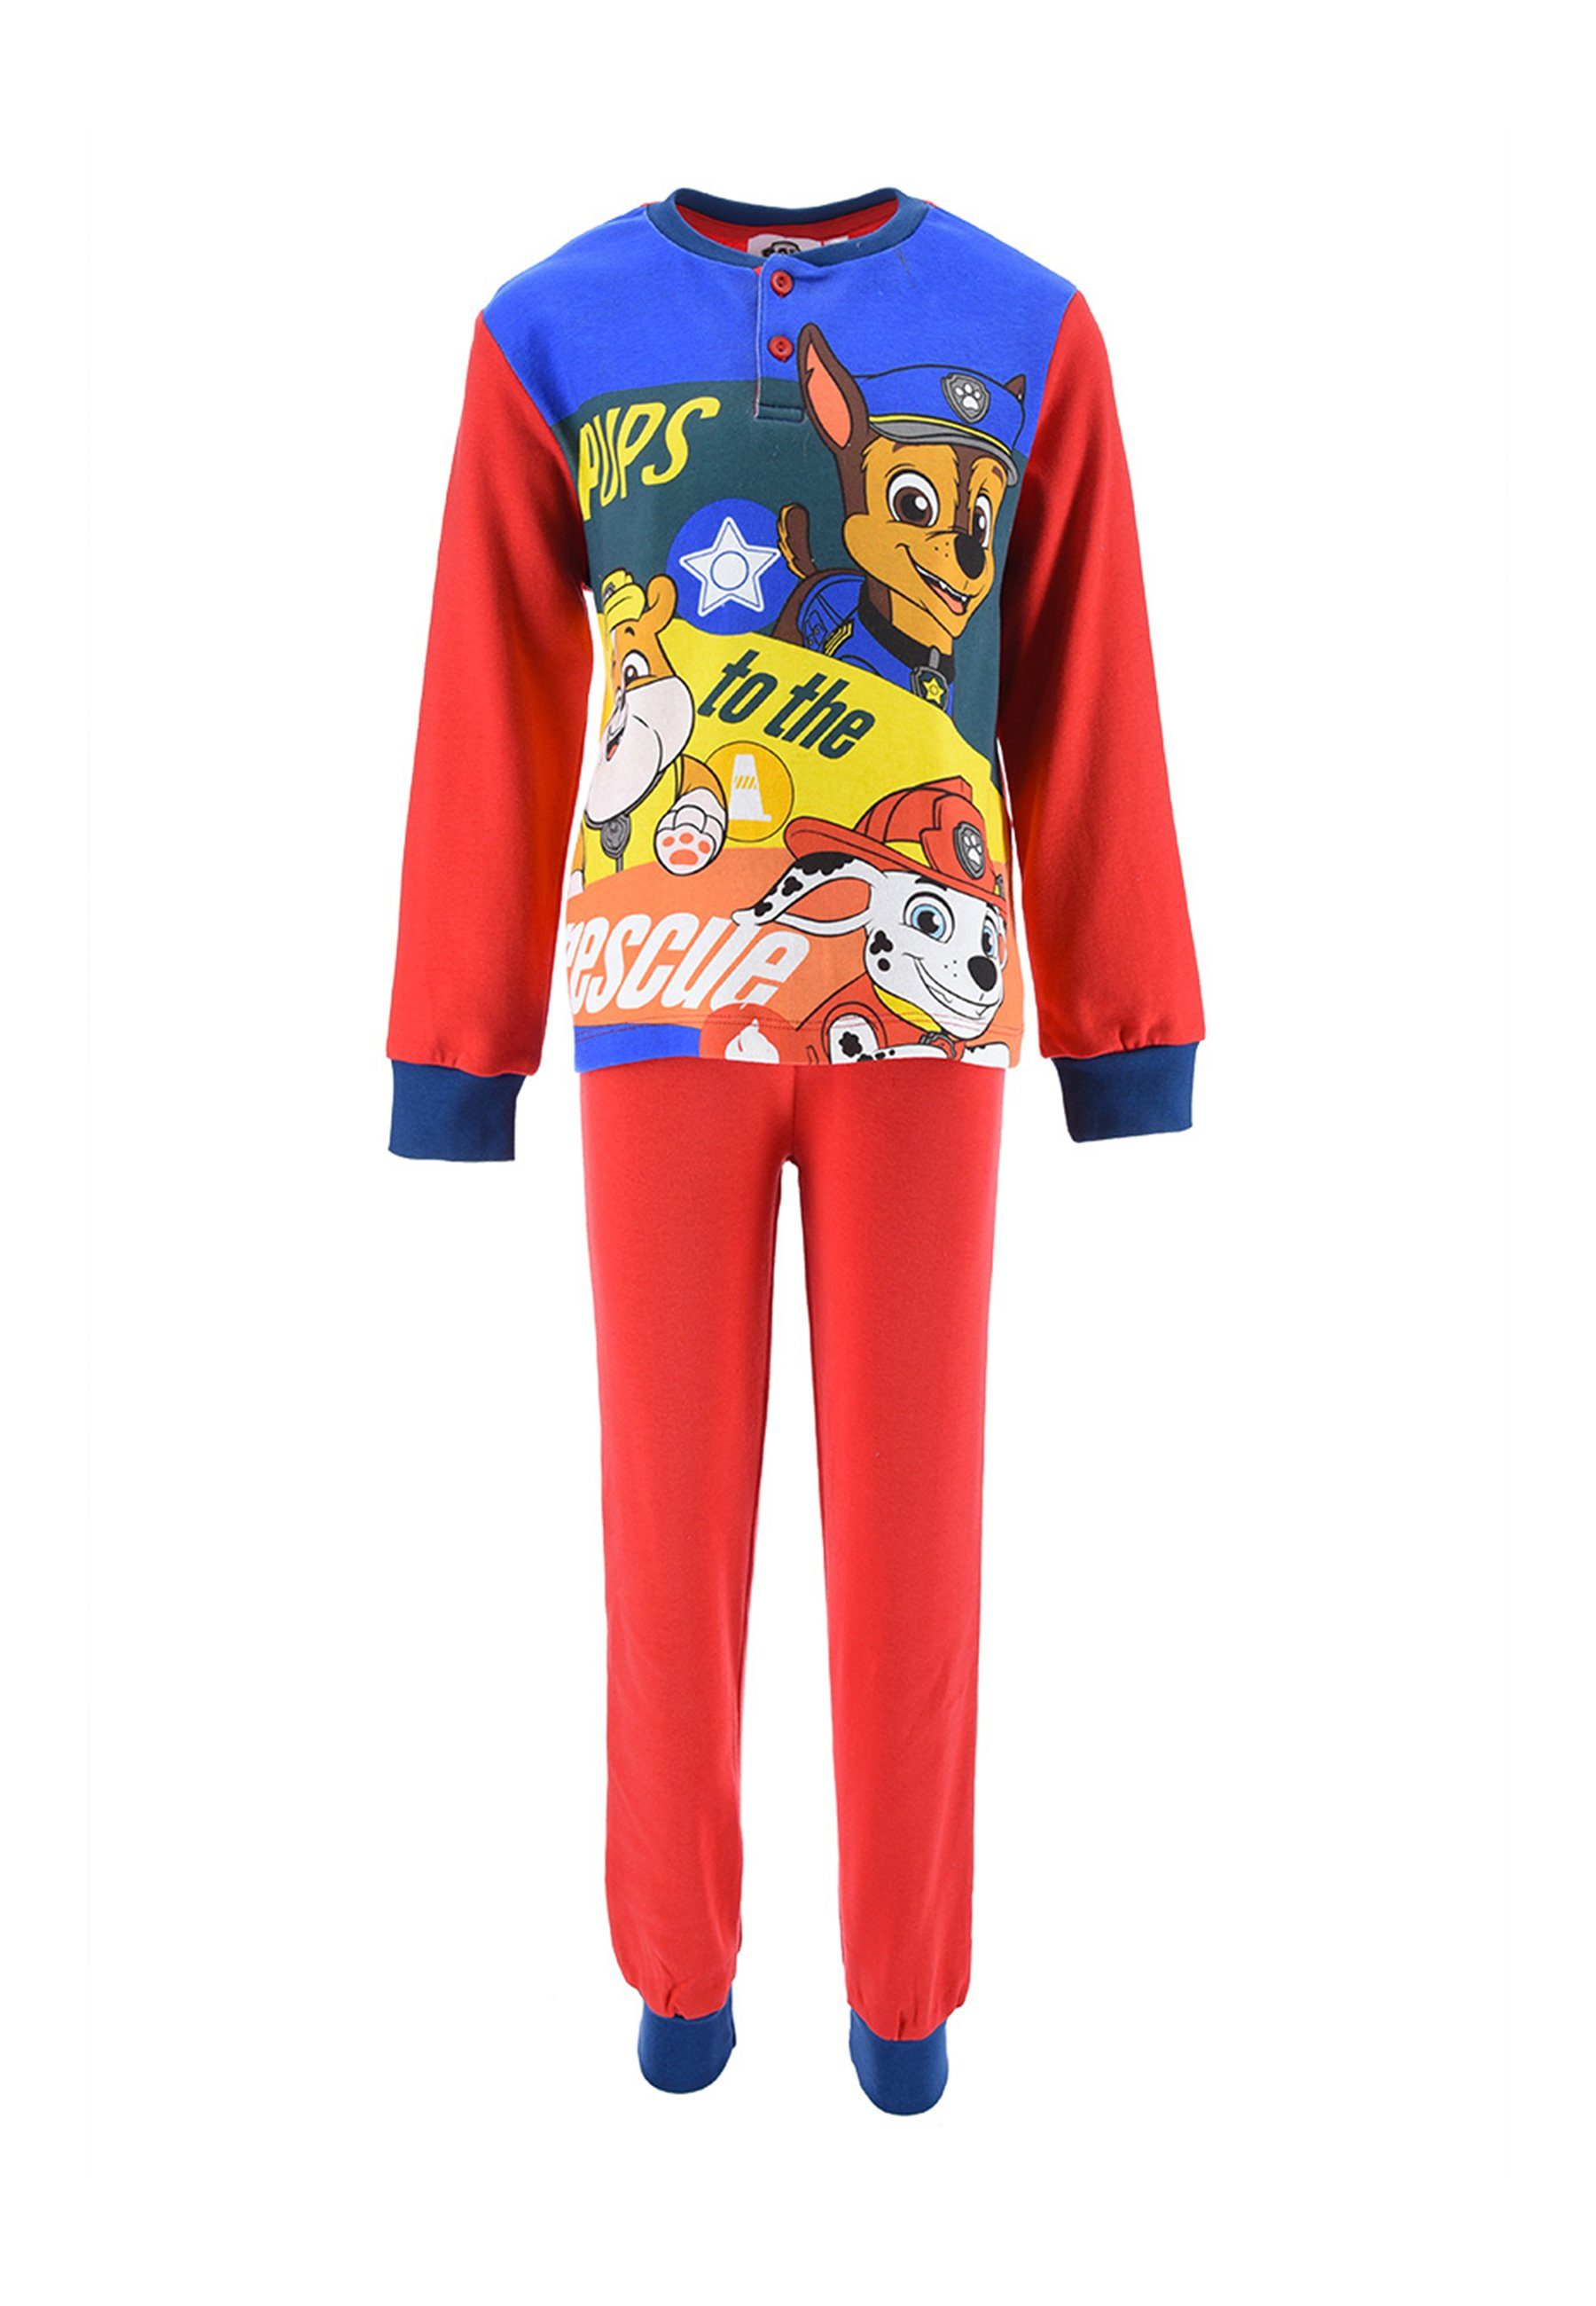 tlg) Kinder Marshall Rot Chase PAW Nachtwäsche (2 PATROL langarm Schlafanzug Jungen Pyjama Rubble